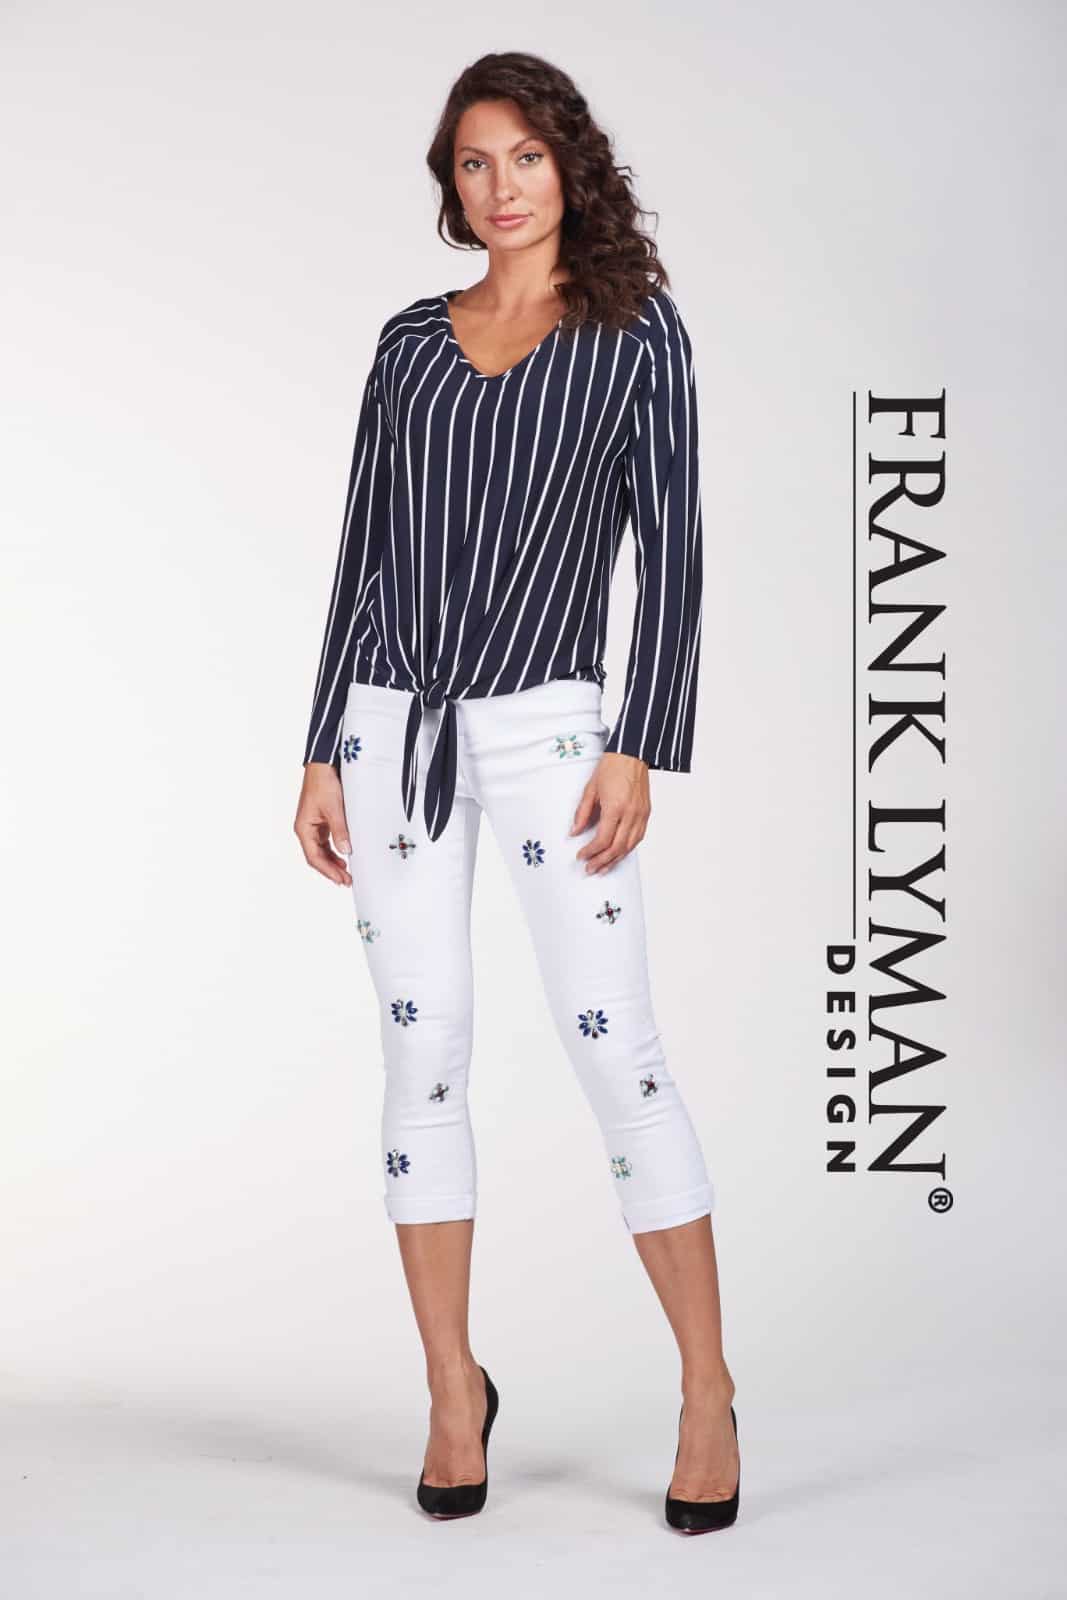 Frank Lyman Jeans